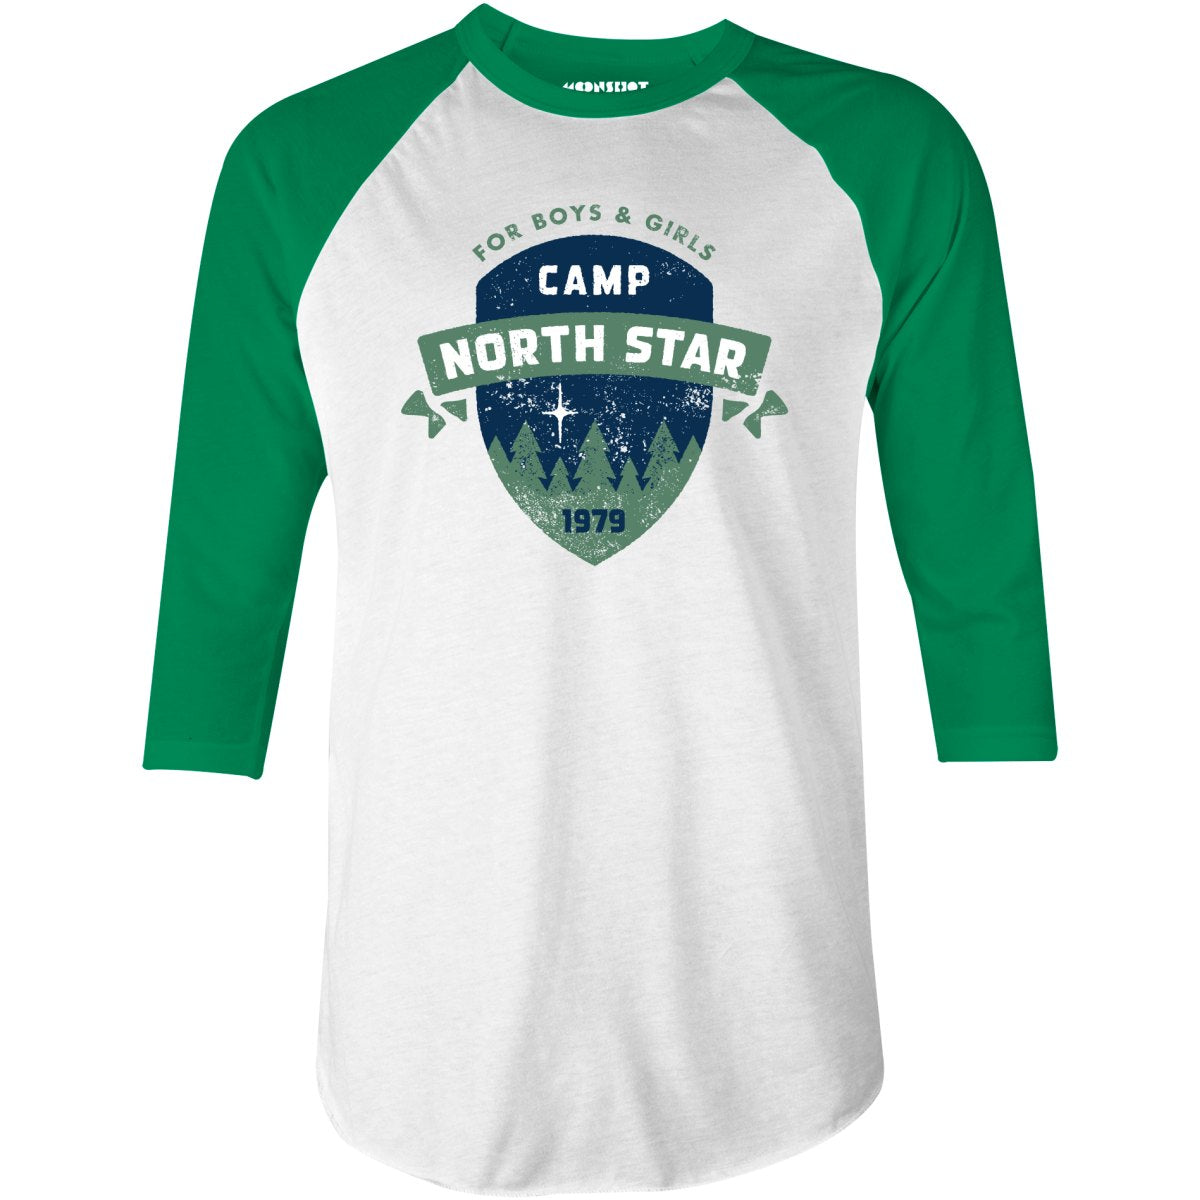 Camp North Star 1979 - 3/4 Sleeve Raglan T-Shirt